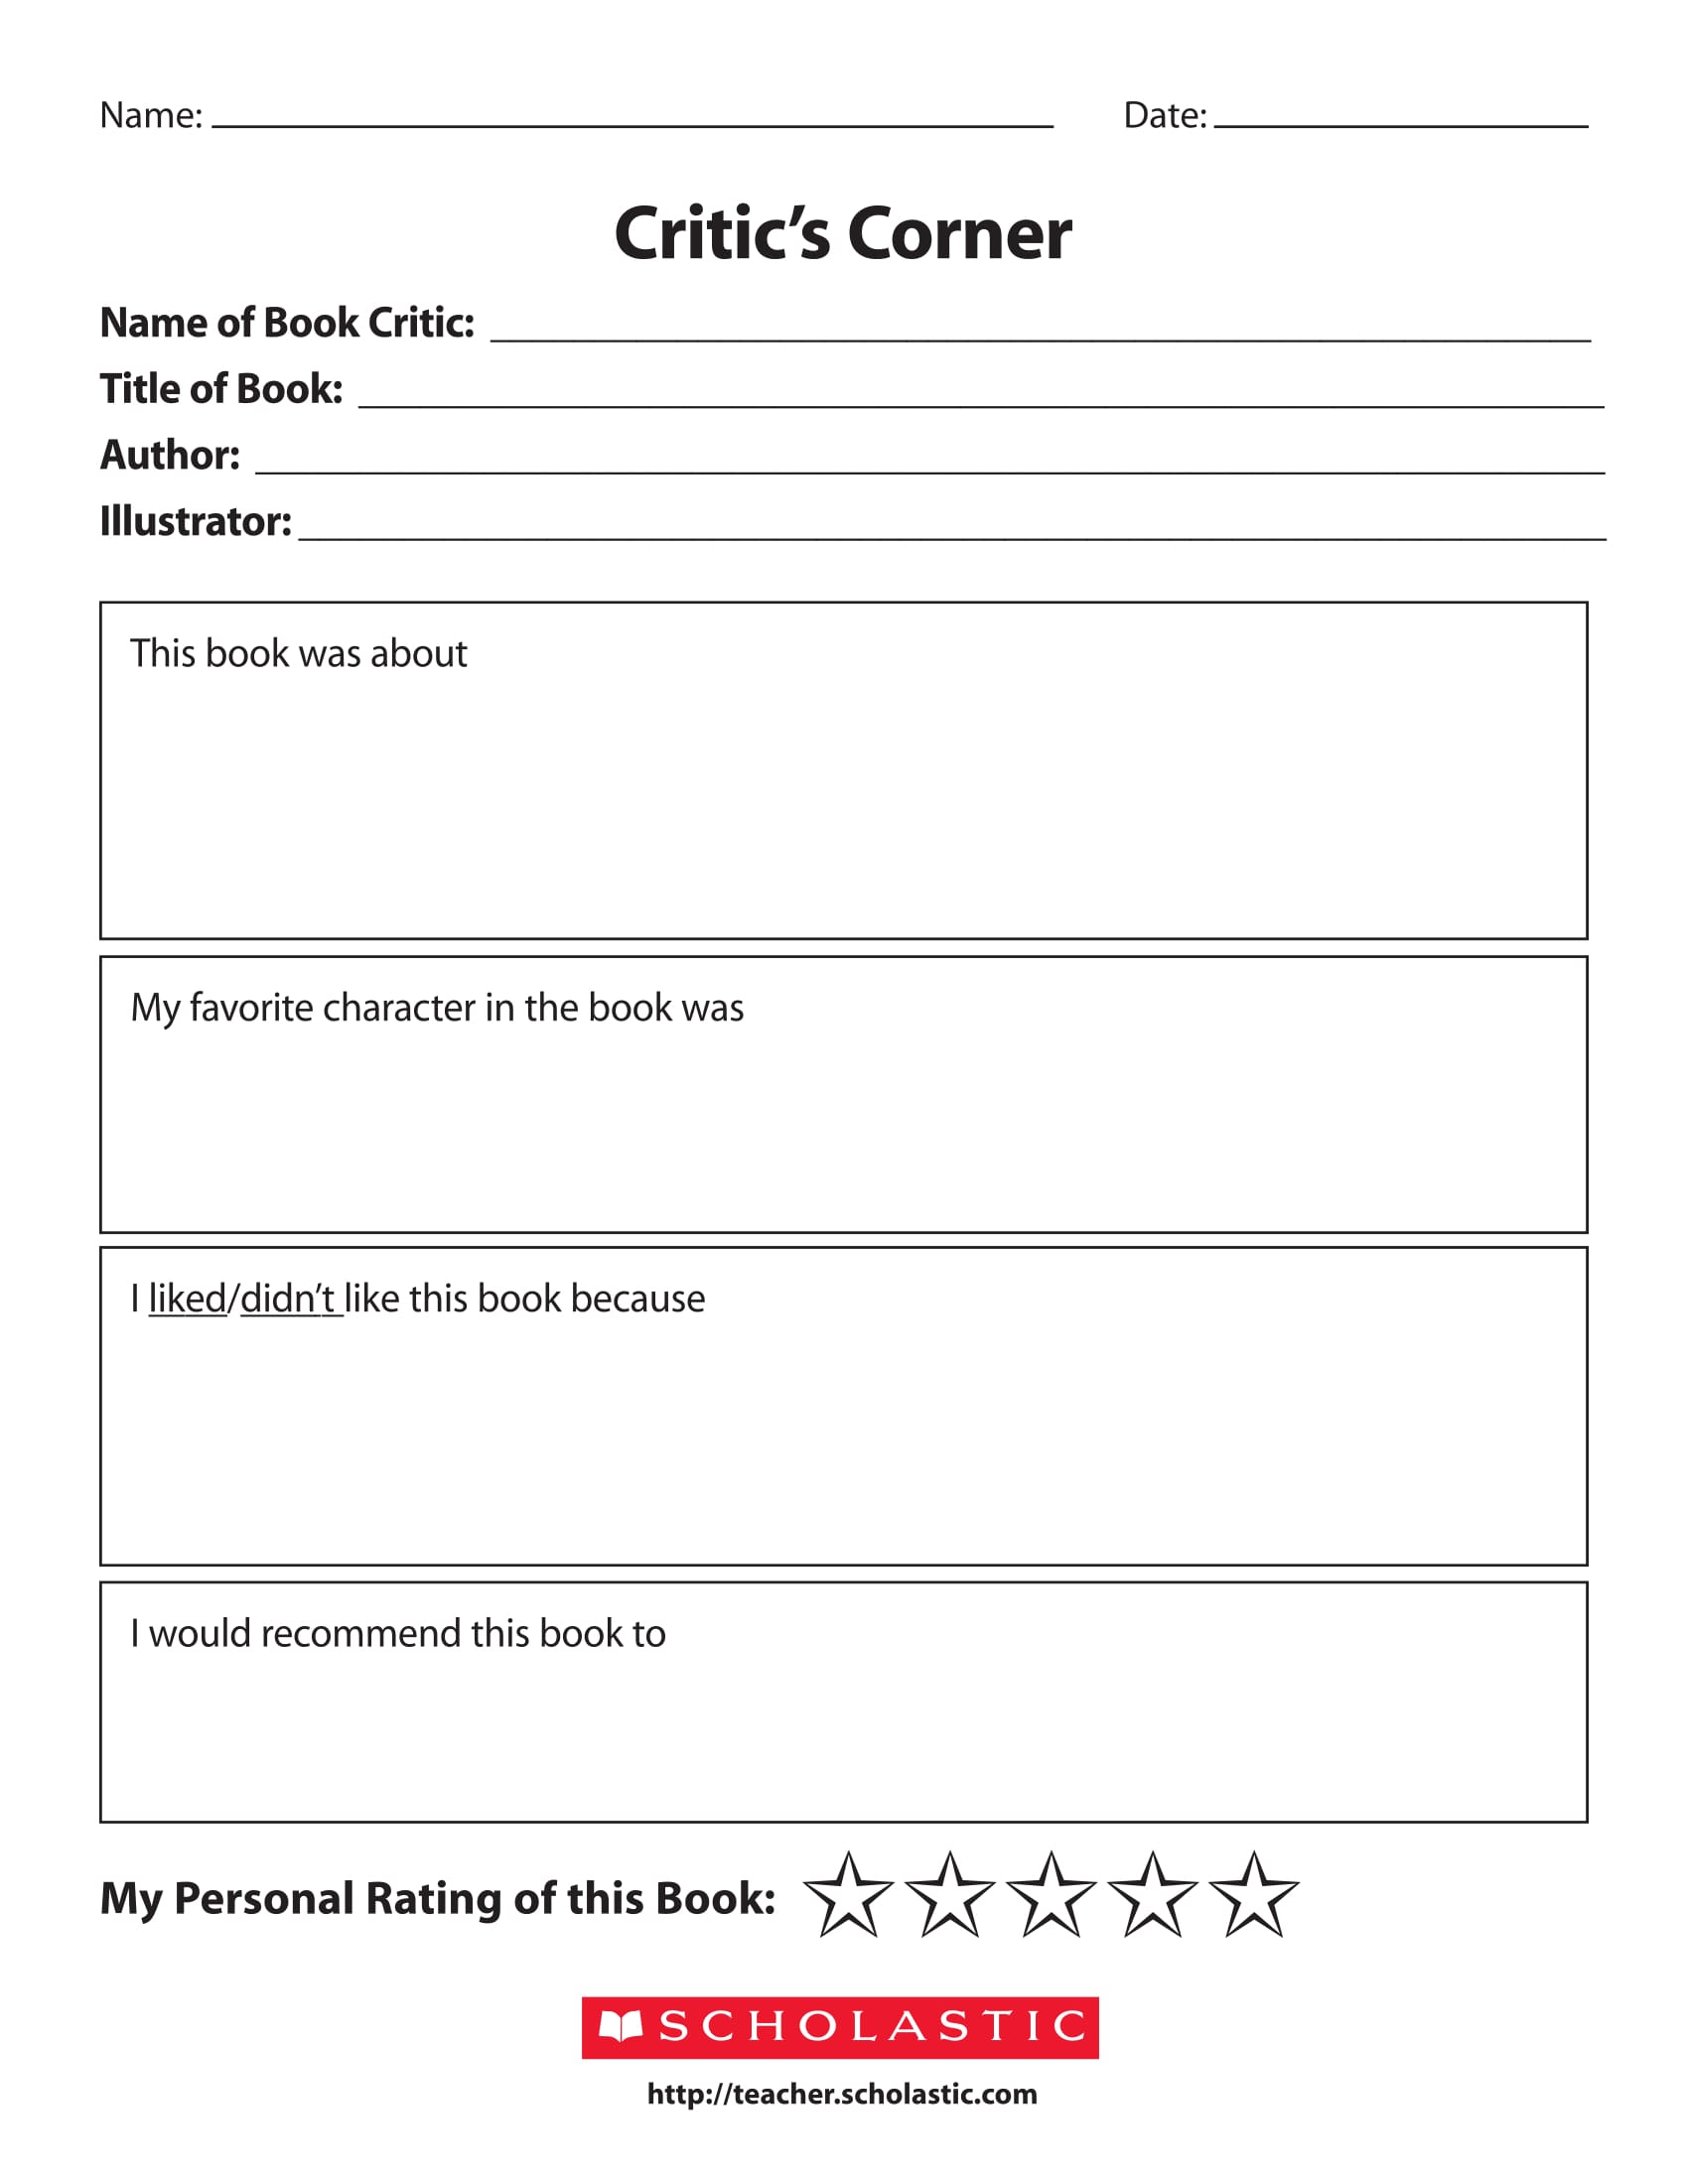 book critic evaluation form 1